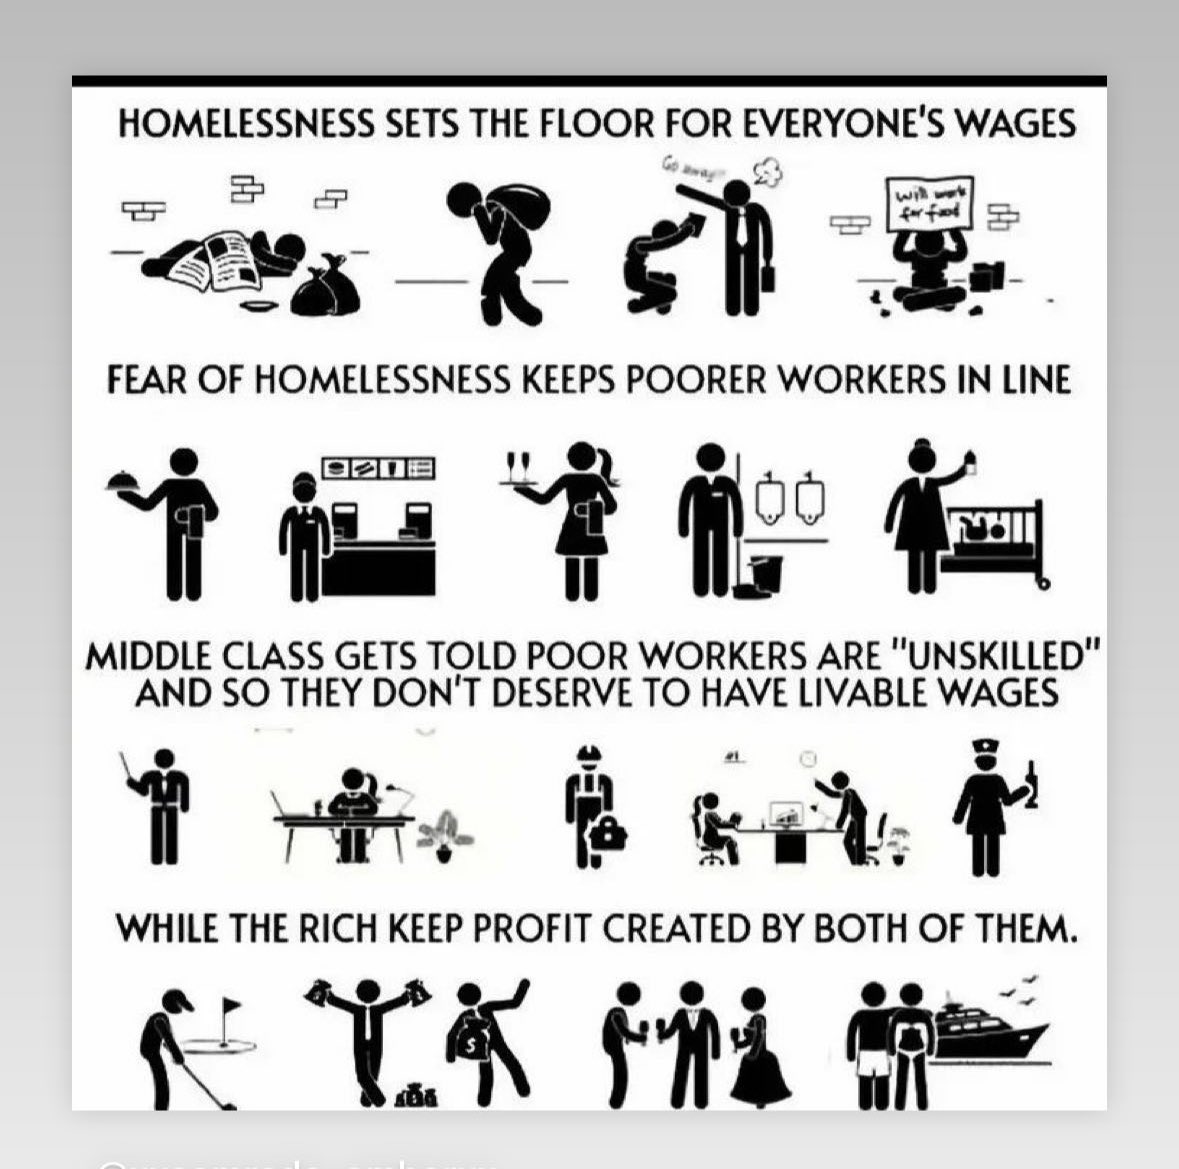 #moreaffordablehousingnow #homeless #yyz #kmops #kensingtonmarket #helpthem